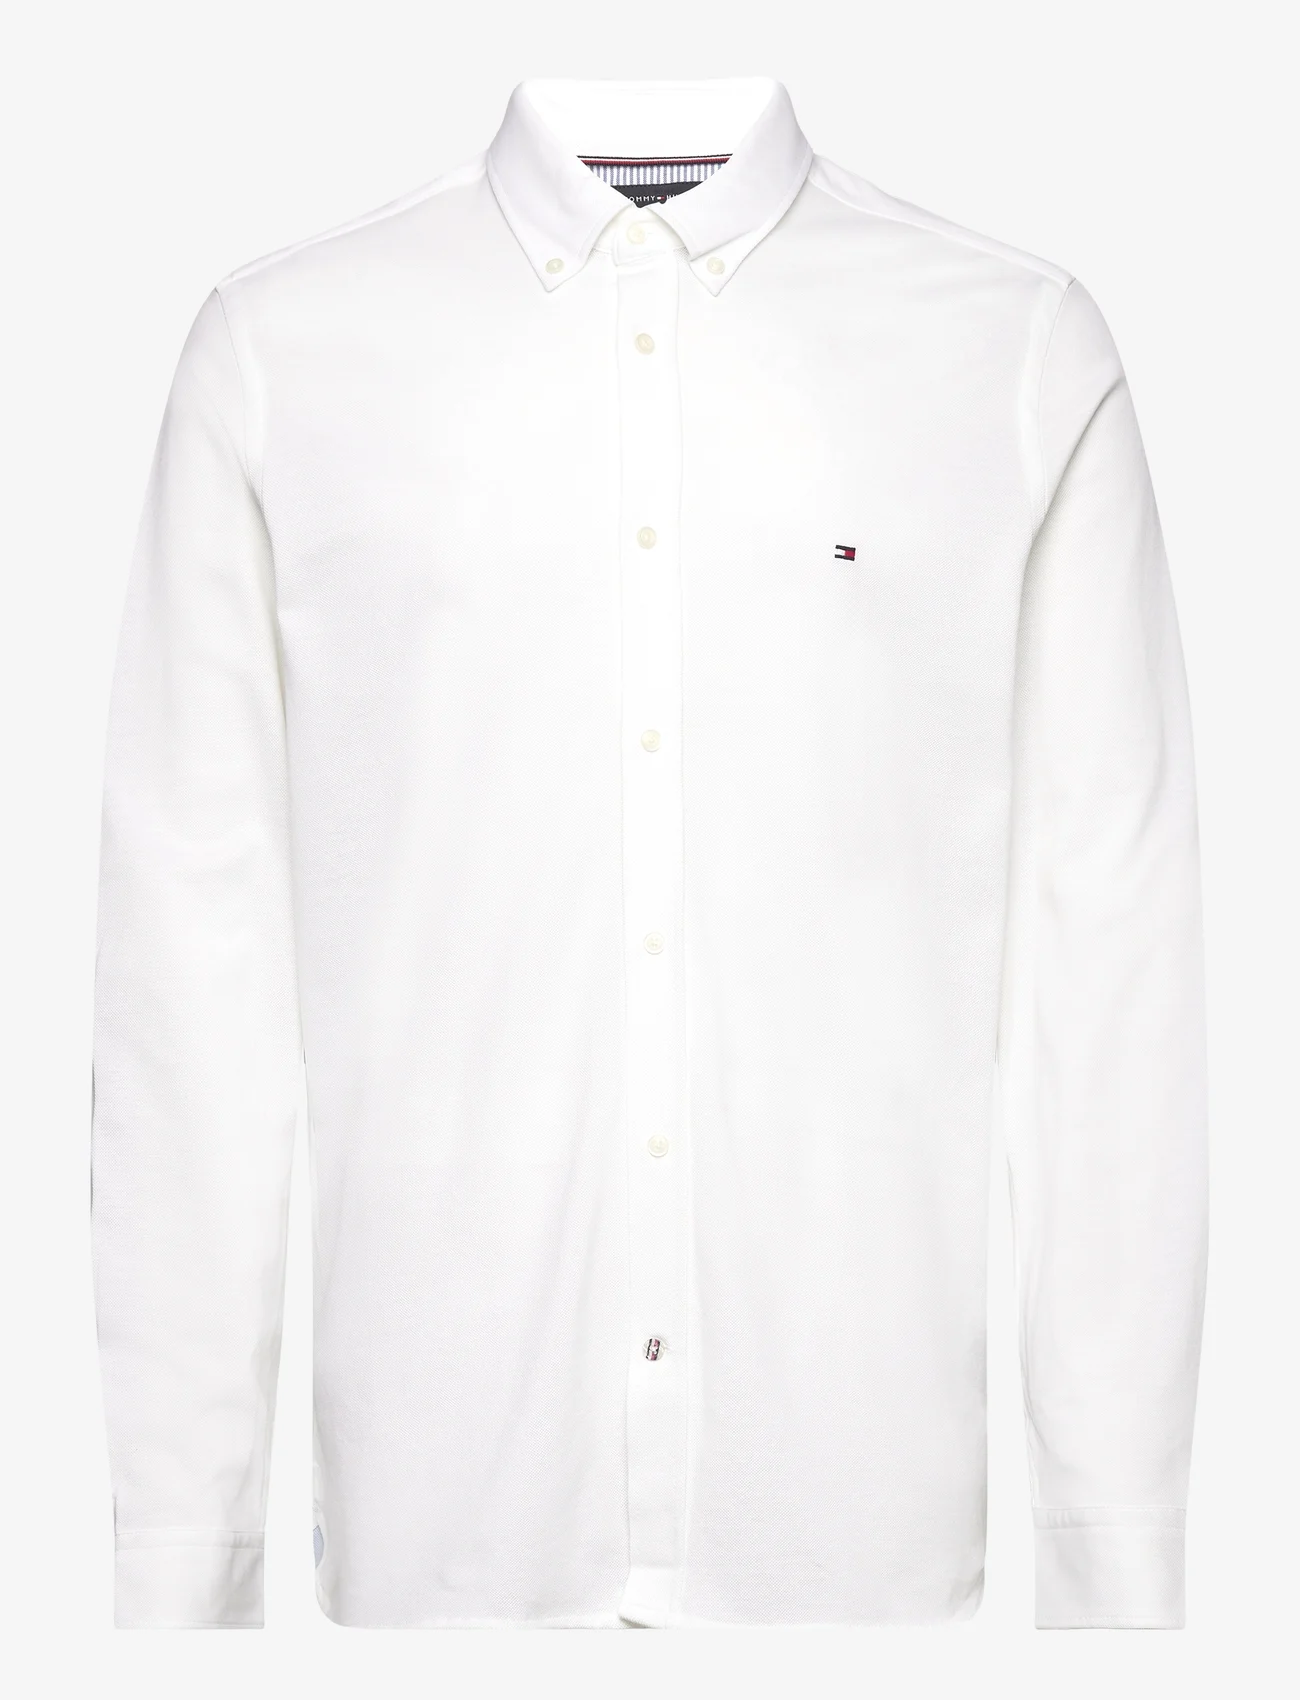 Tommy Hilfiger - 1985 KNITTED SF SHIRT - basic skjorter - optic white - 0